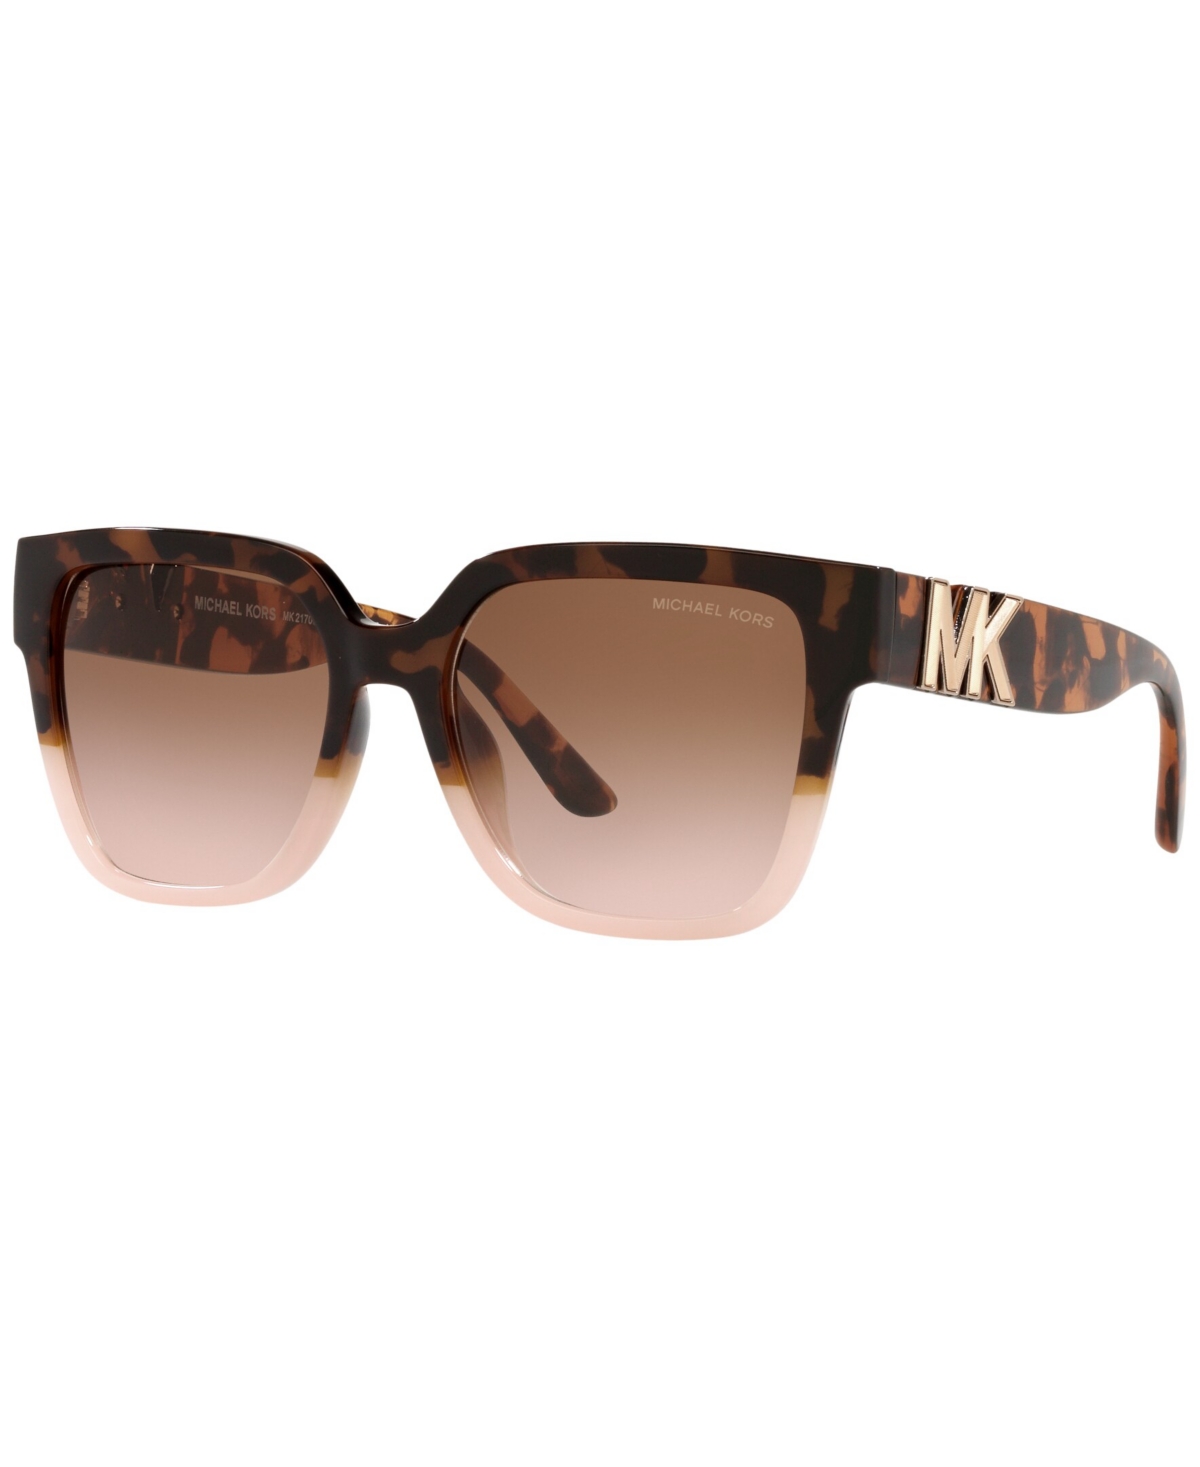 Michael Kors Purses, Bags, Sunglasses on Clearance & Closeout - Macy's